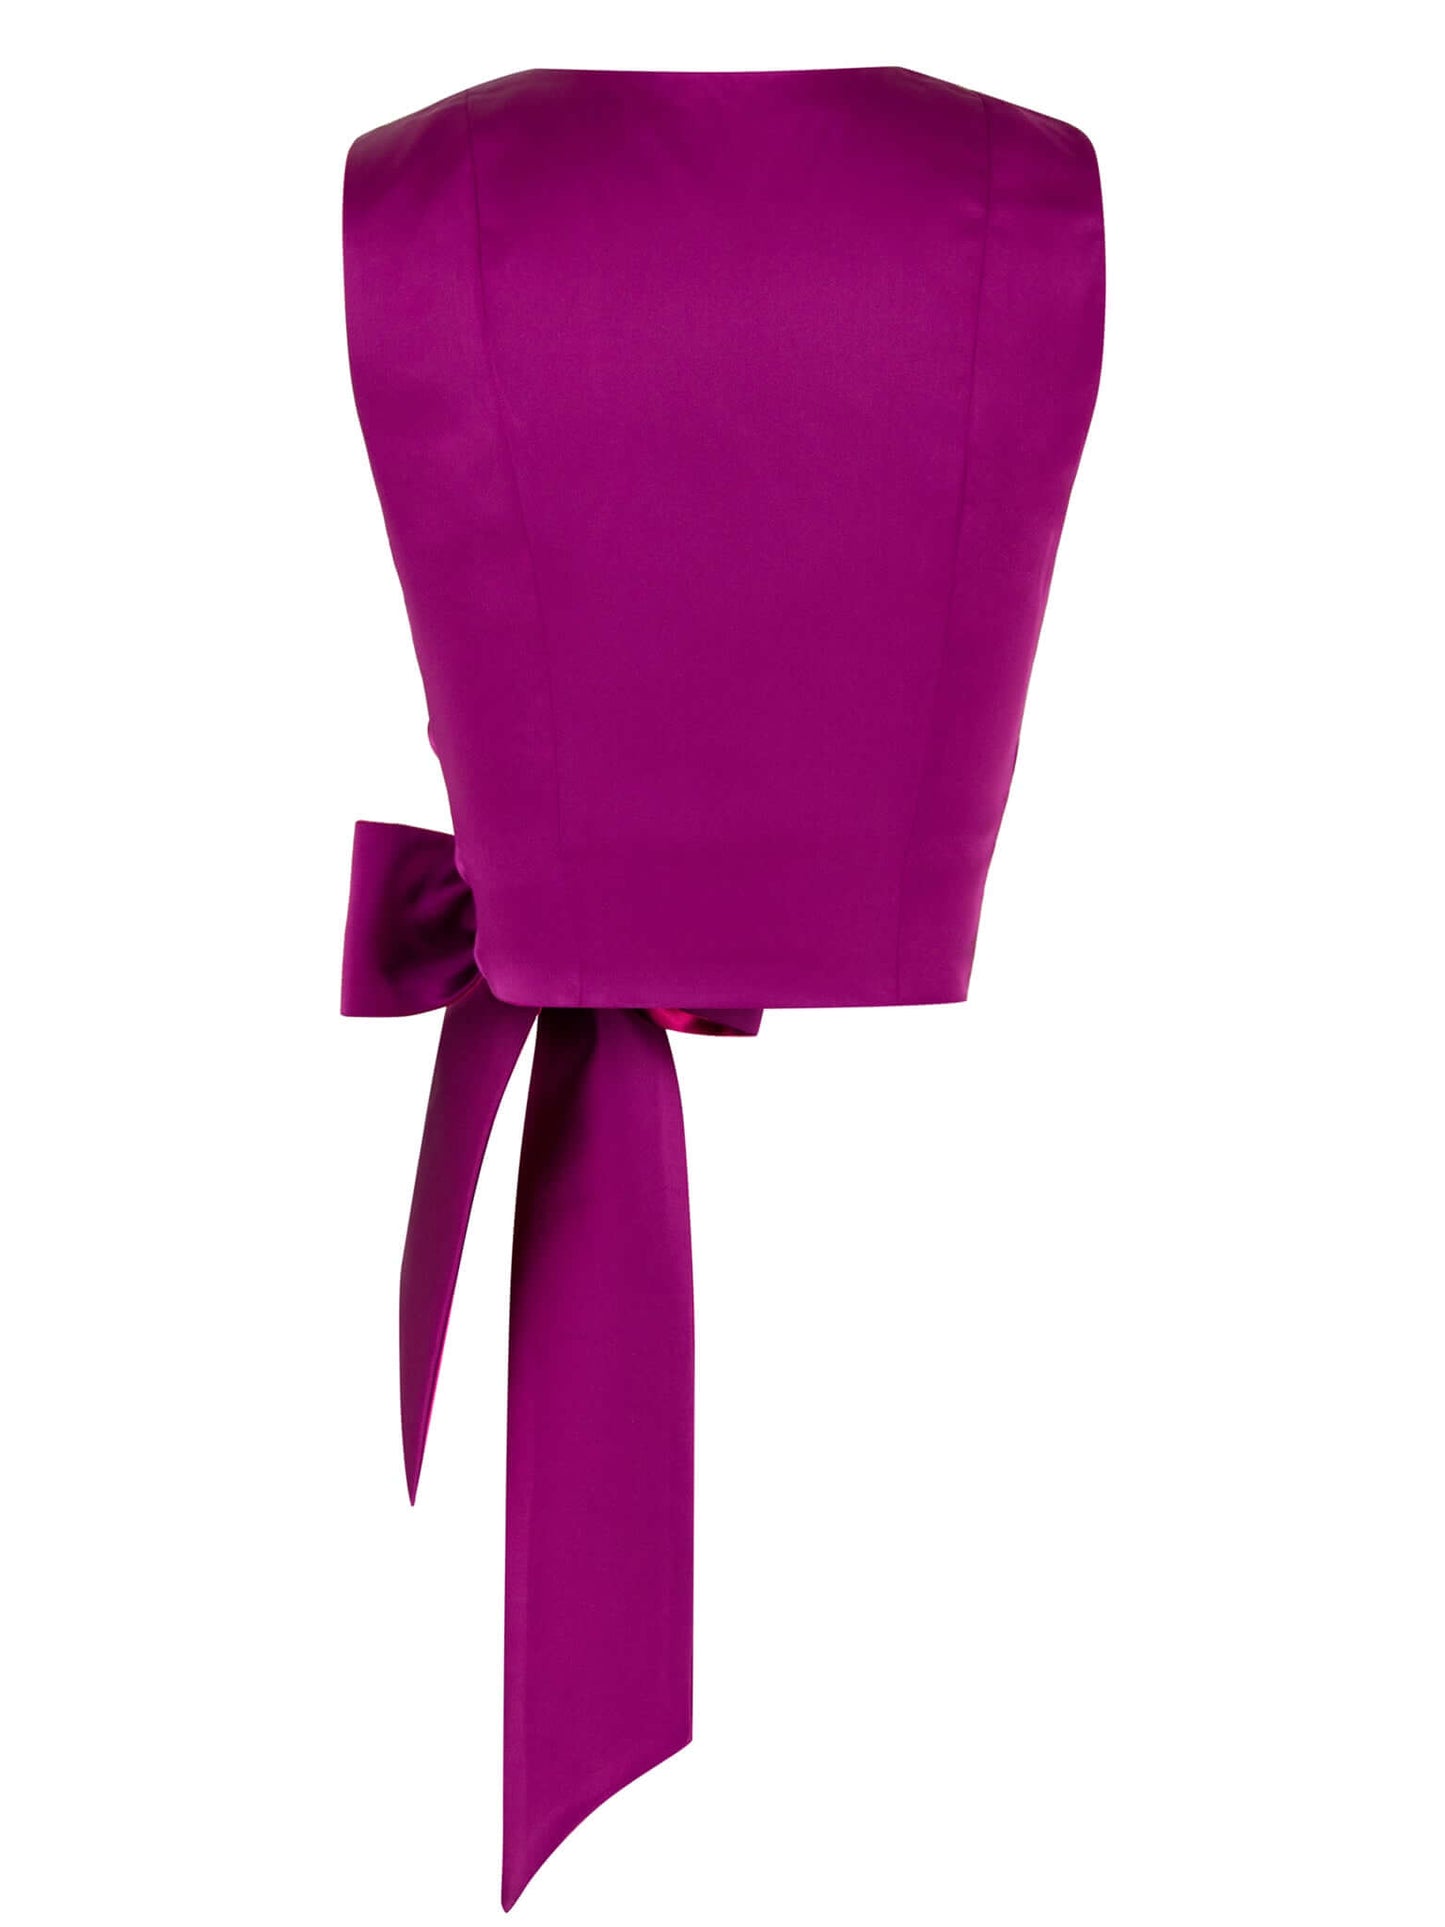 Wild Dream Two-Faced Crop Top - Pink & Purple by Tia Dorraine Women's Luxury Fashion Designer Clothing Brand